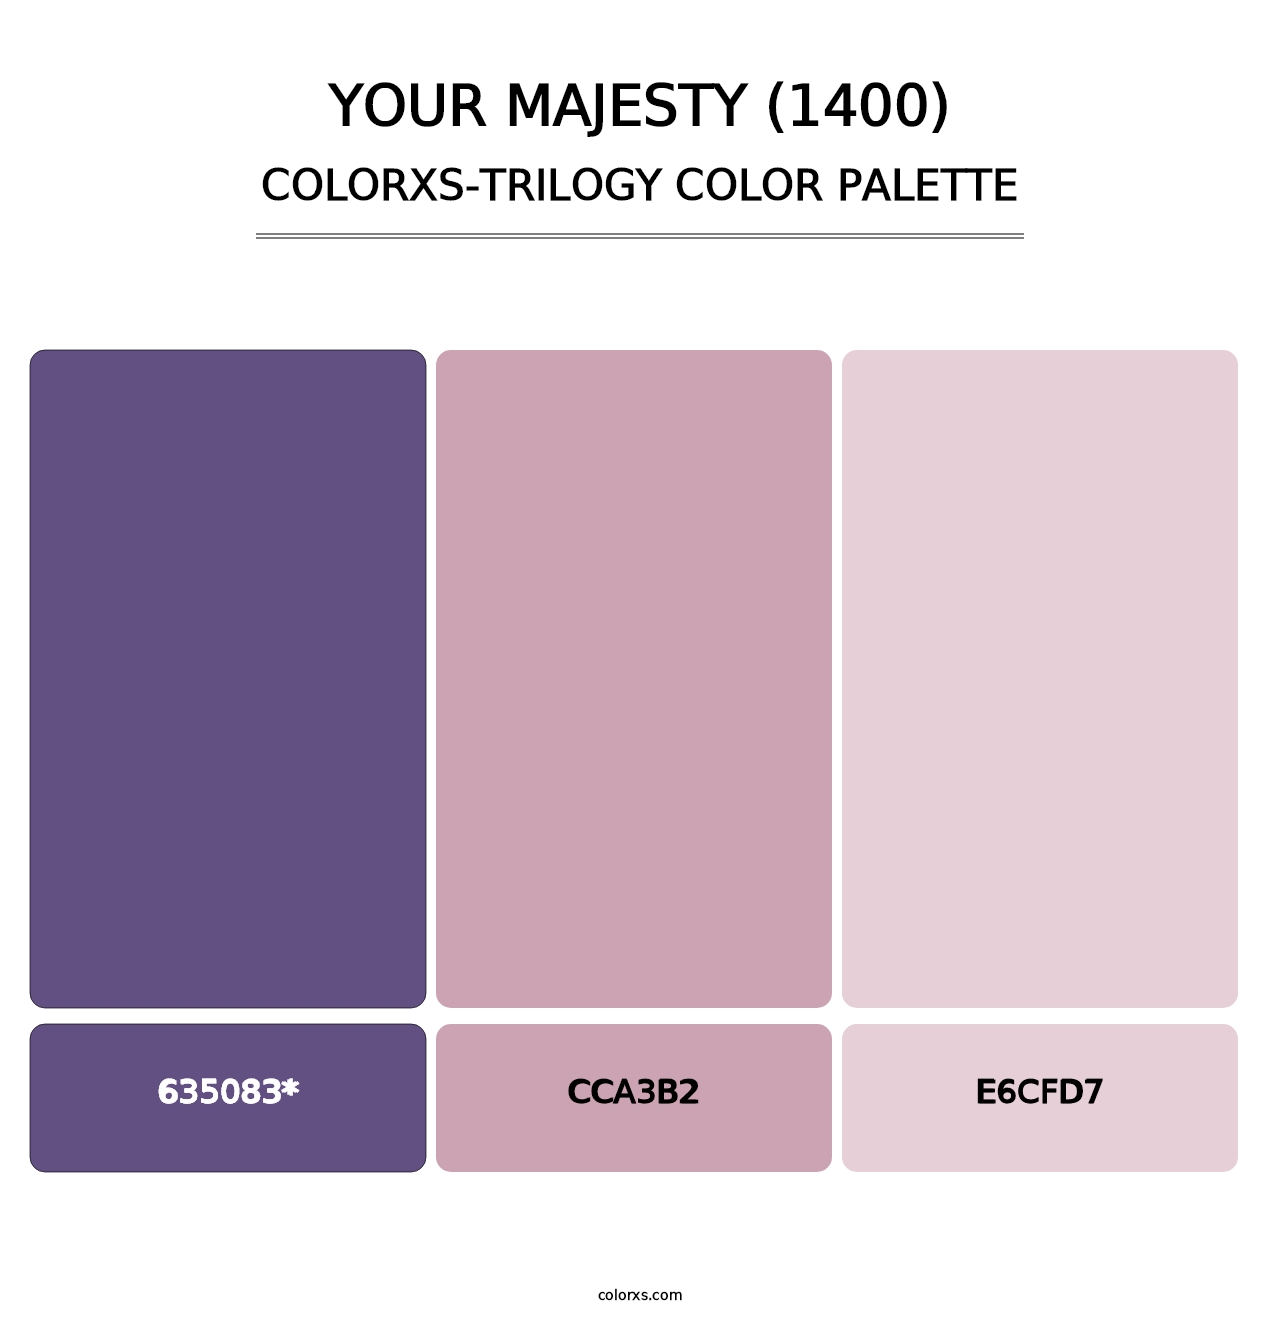 Your Majesty (1400) - Colorxs Trilogy Palette